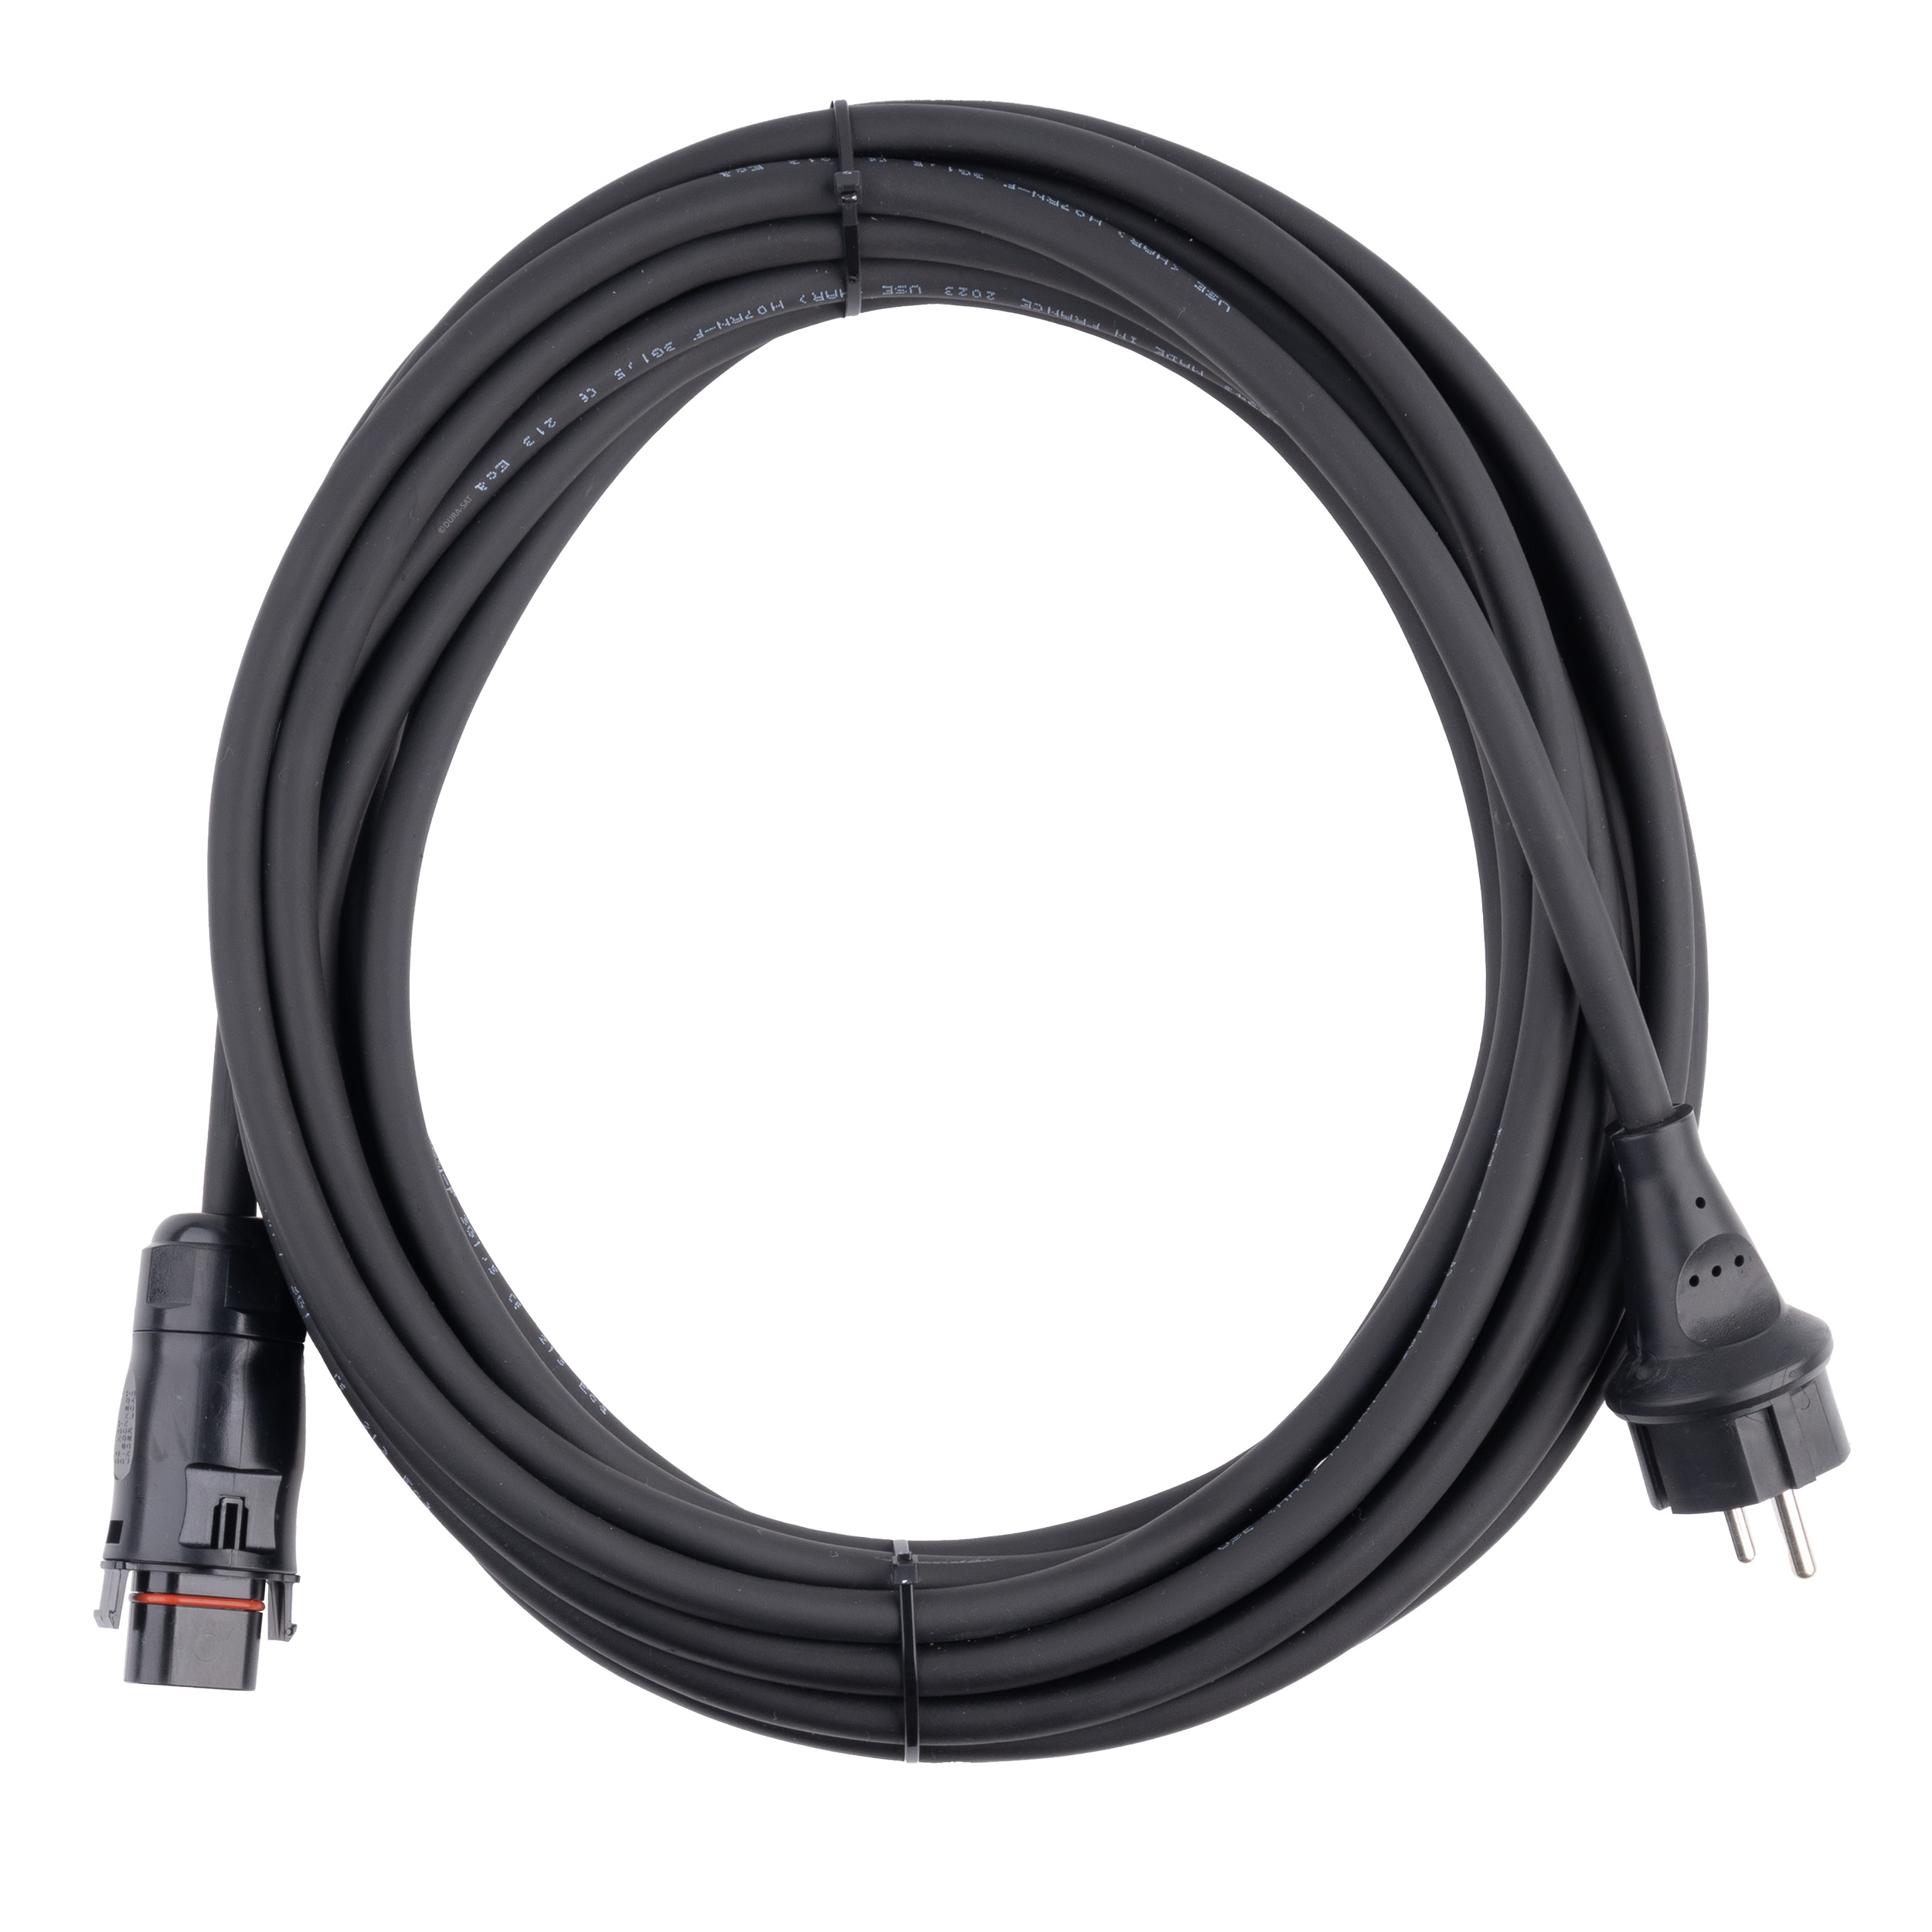 https://www.durasat.de/out/pictures/master/product/1/450052_konturenleitung-luyi-40a-auf-schutzkontakt-10m-elektro-kabel-draufsicht-shop(3).jpg